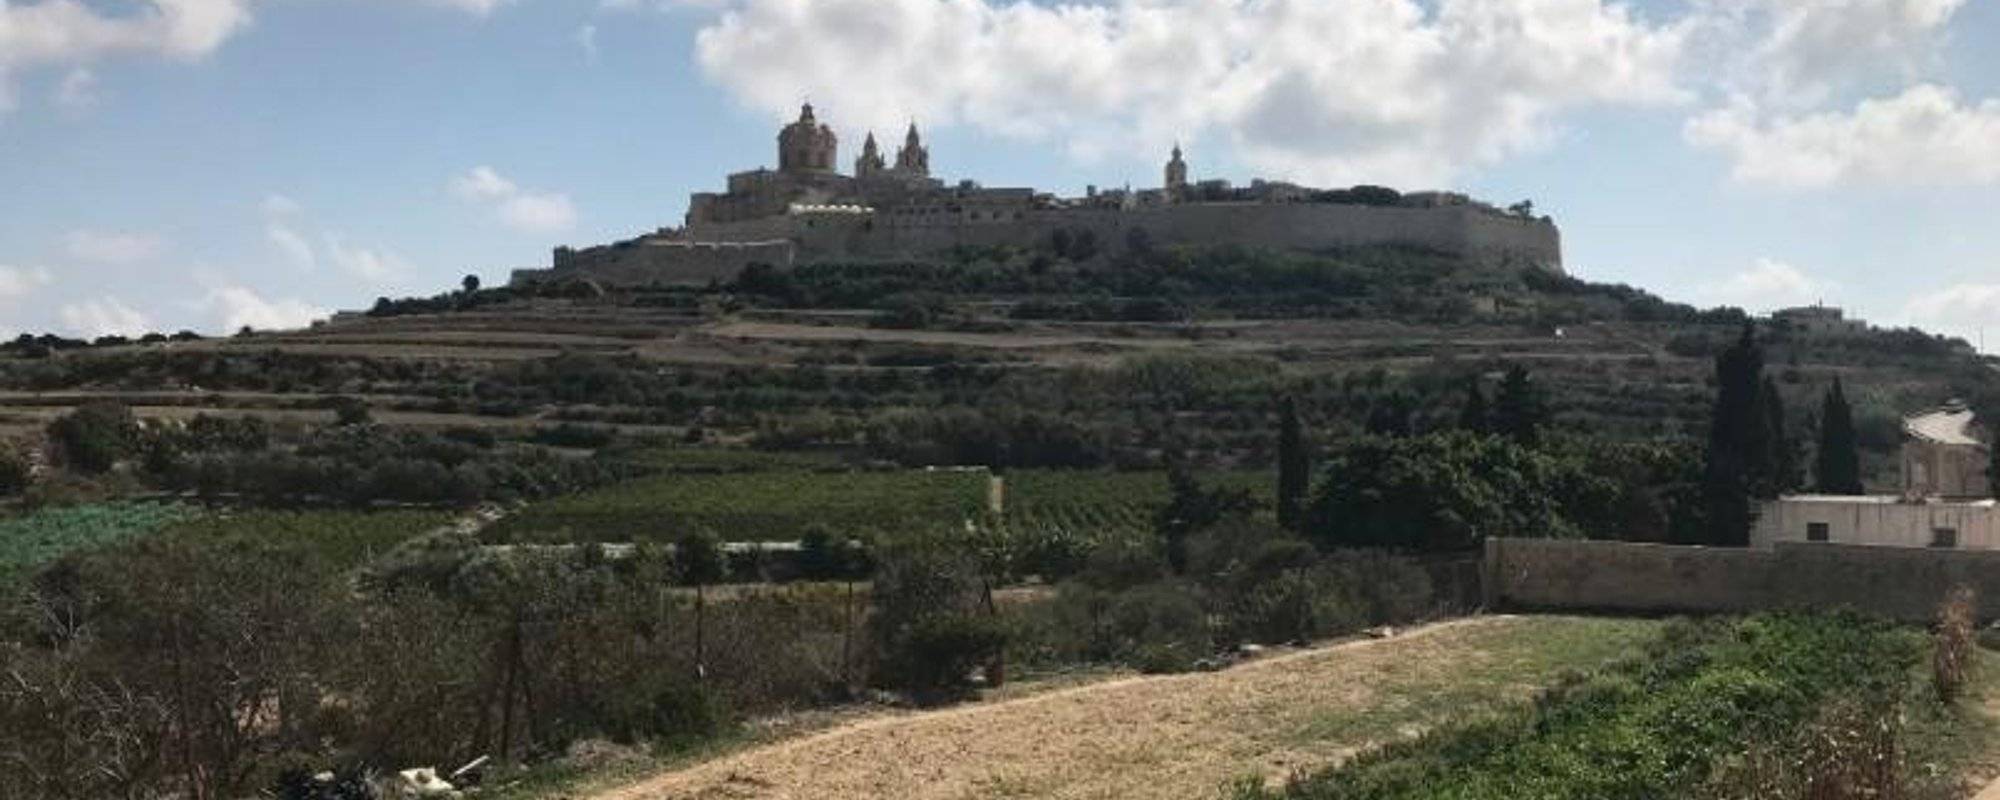 Exploring Malta: Mdina and Rabat